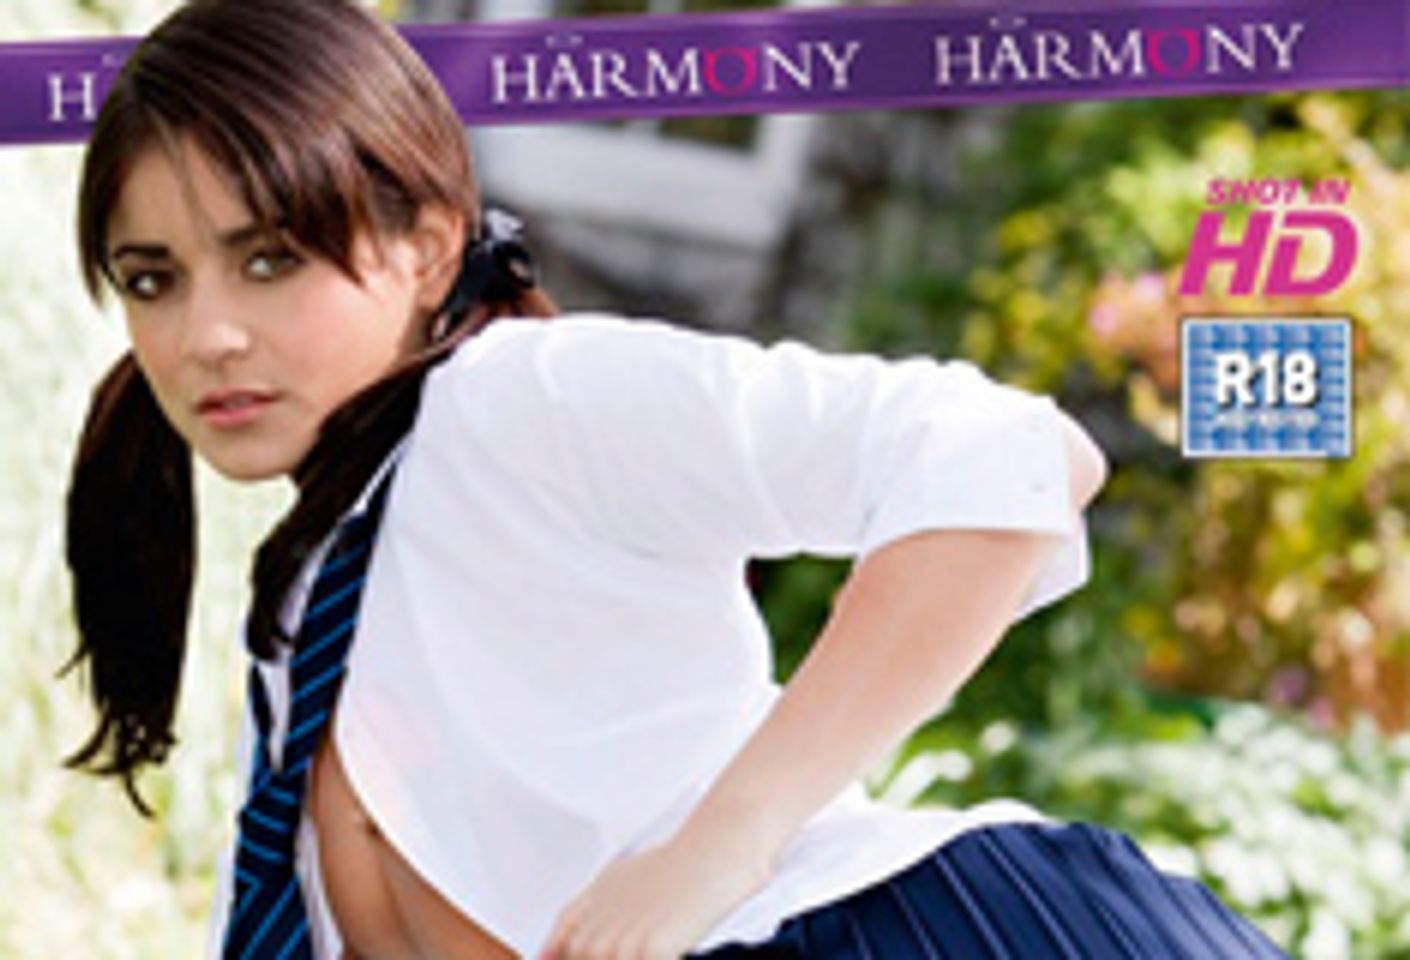 Harmony Wraps Latest 'Young Harlots'